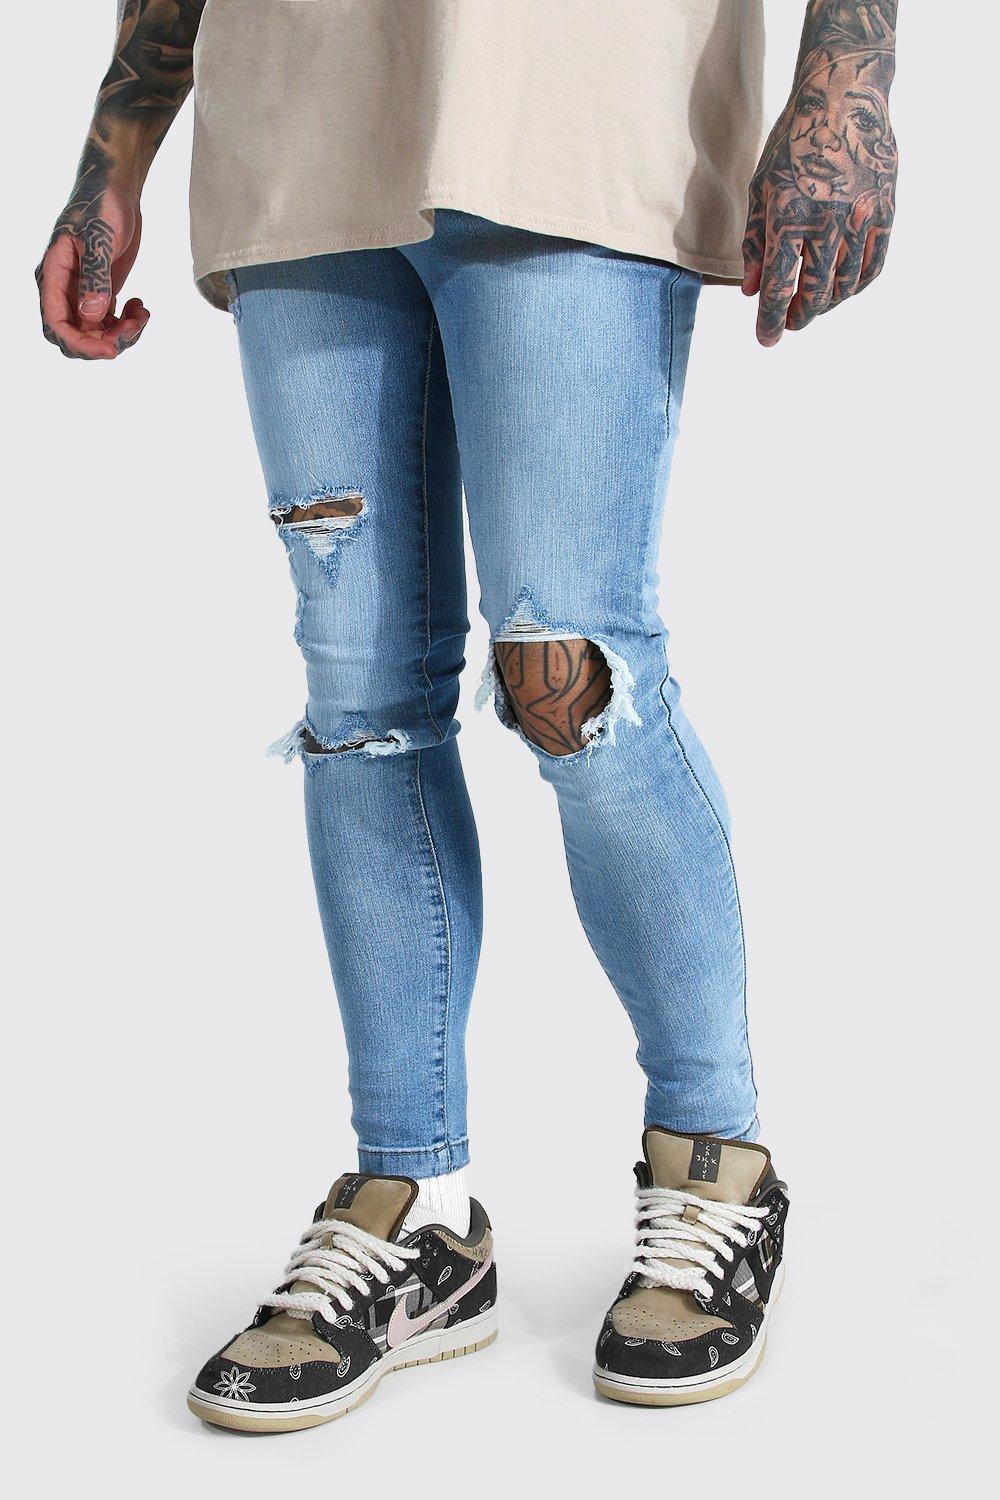 mens ripped jeans australia